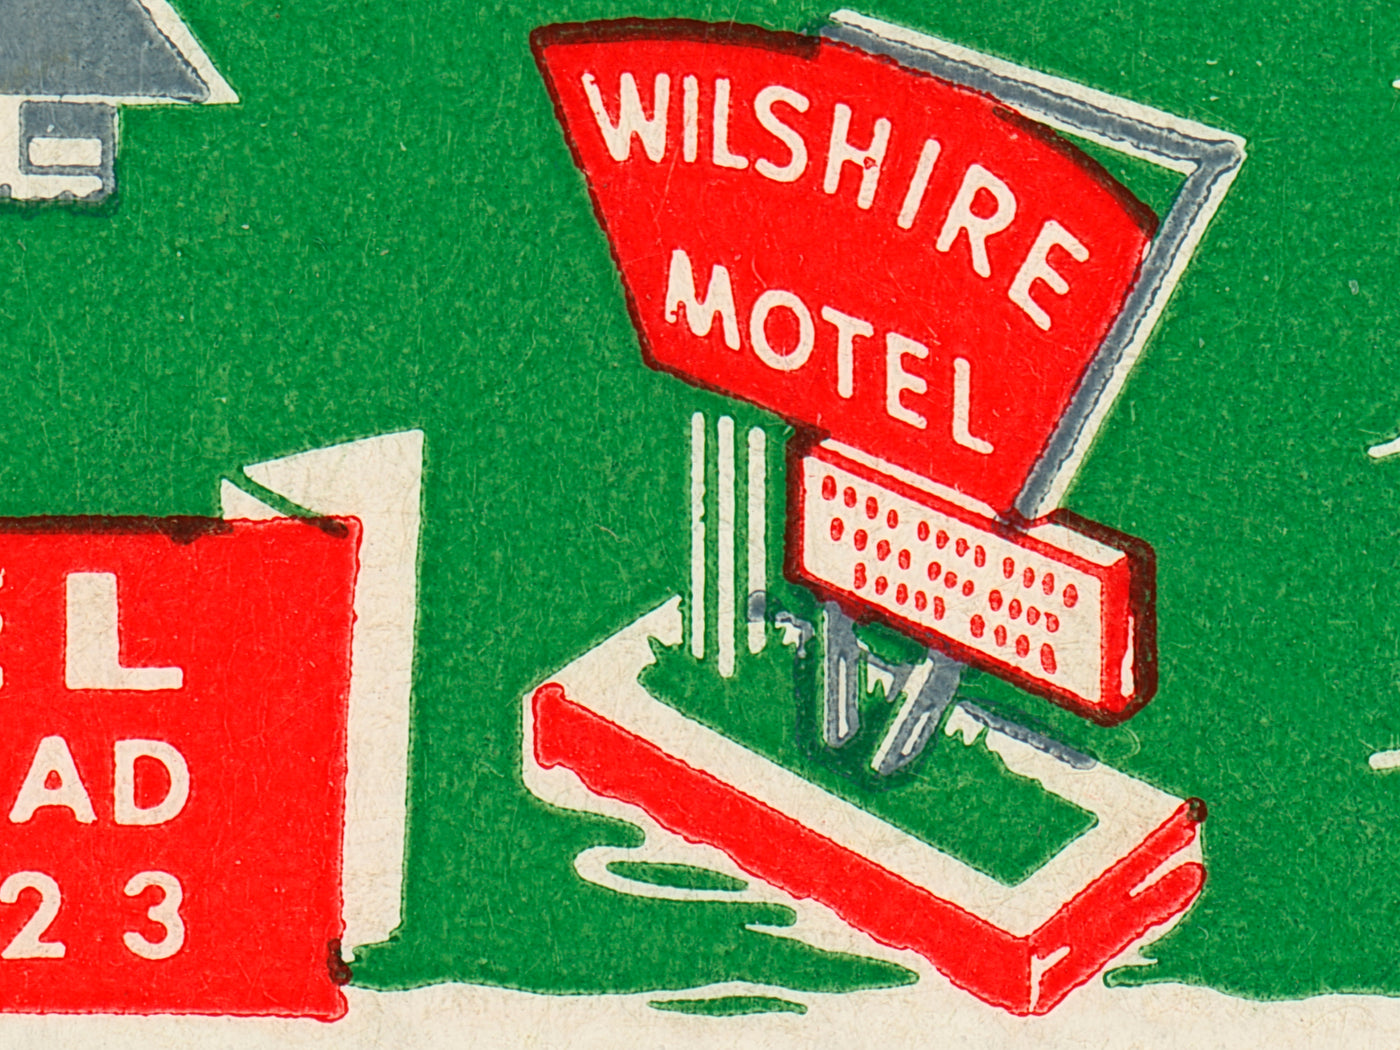 Wilshire Motel Matchbook Print